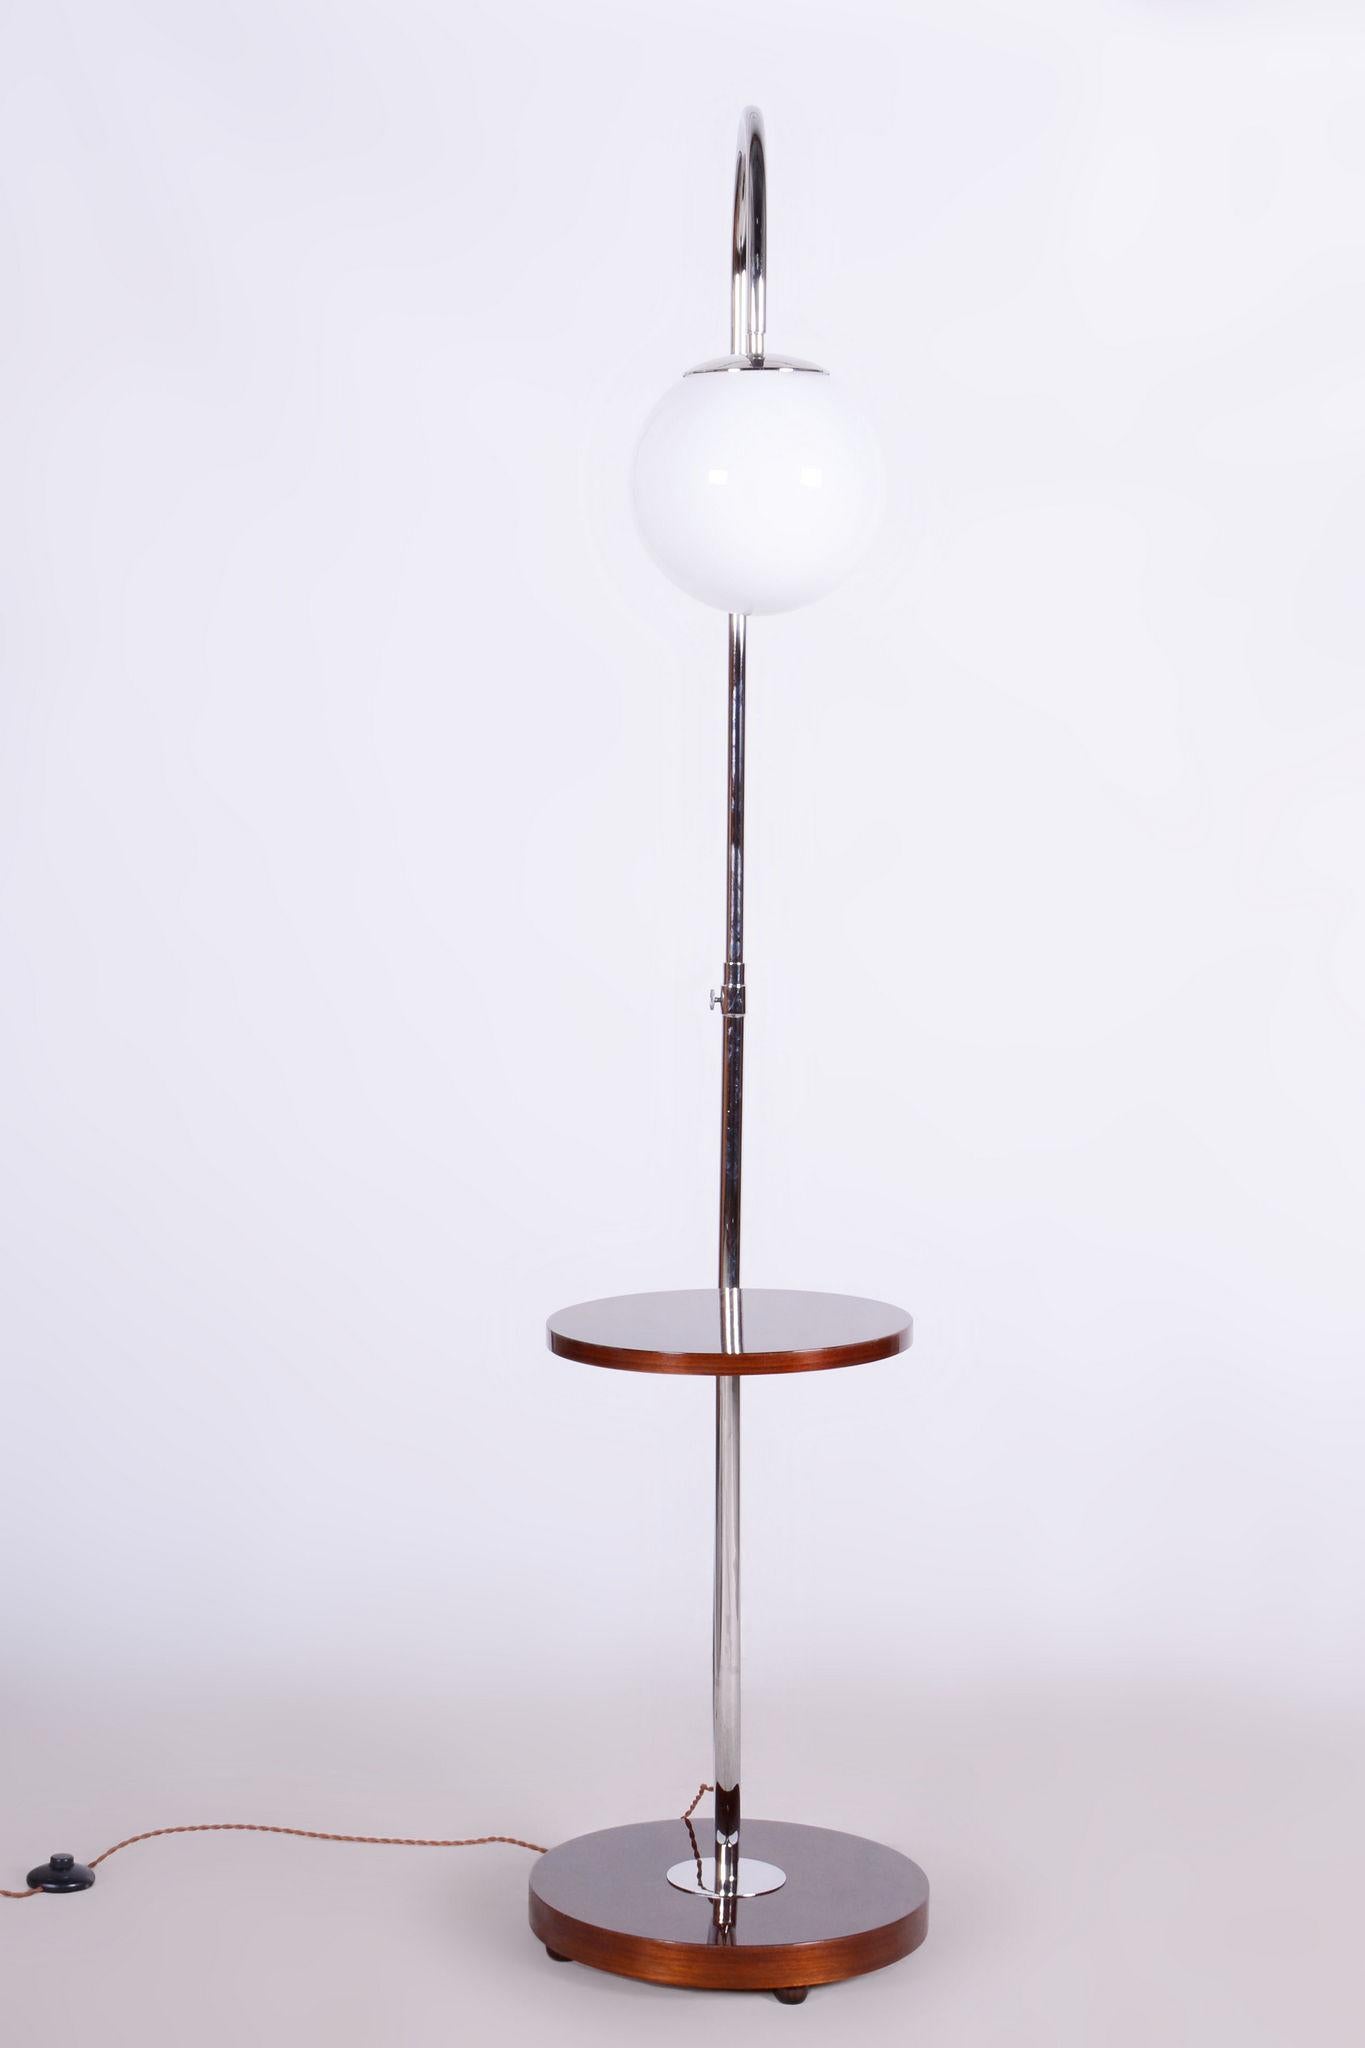 Restored ArtDeco Floor Lamp Designed By Jindrich Halabala. New electrification. Luxury design.

Designer: Jindrich Halabala
Maker: UP Zavody
Material: Walnut, Chrome-plated Steel, Opal Glass
Source: Czechia (Czechoslovakia)
Period: 1930-1939
The